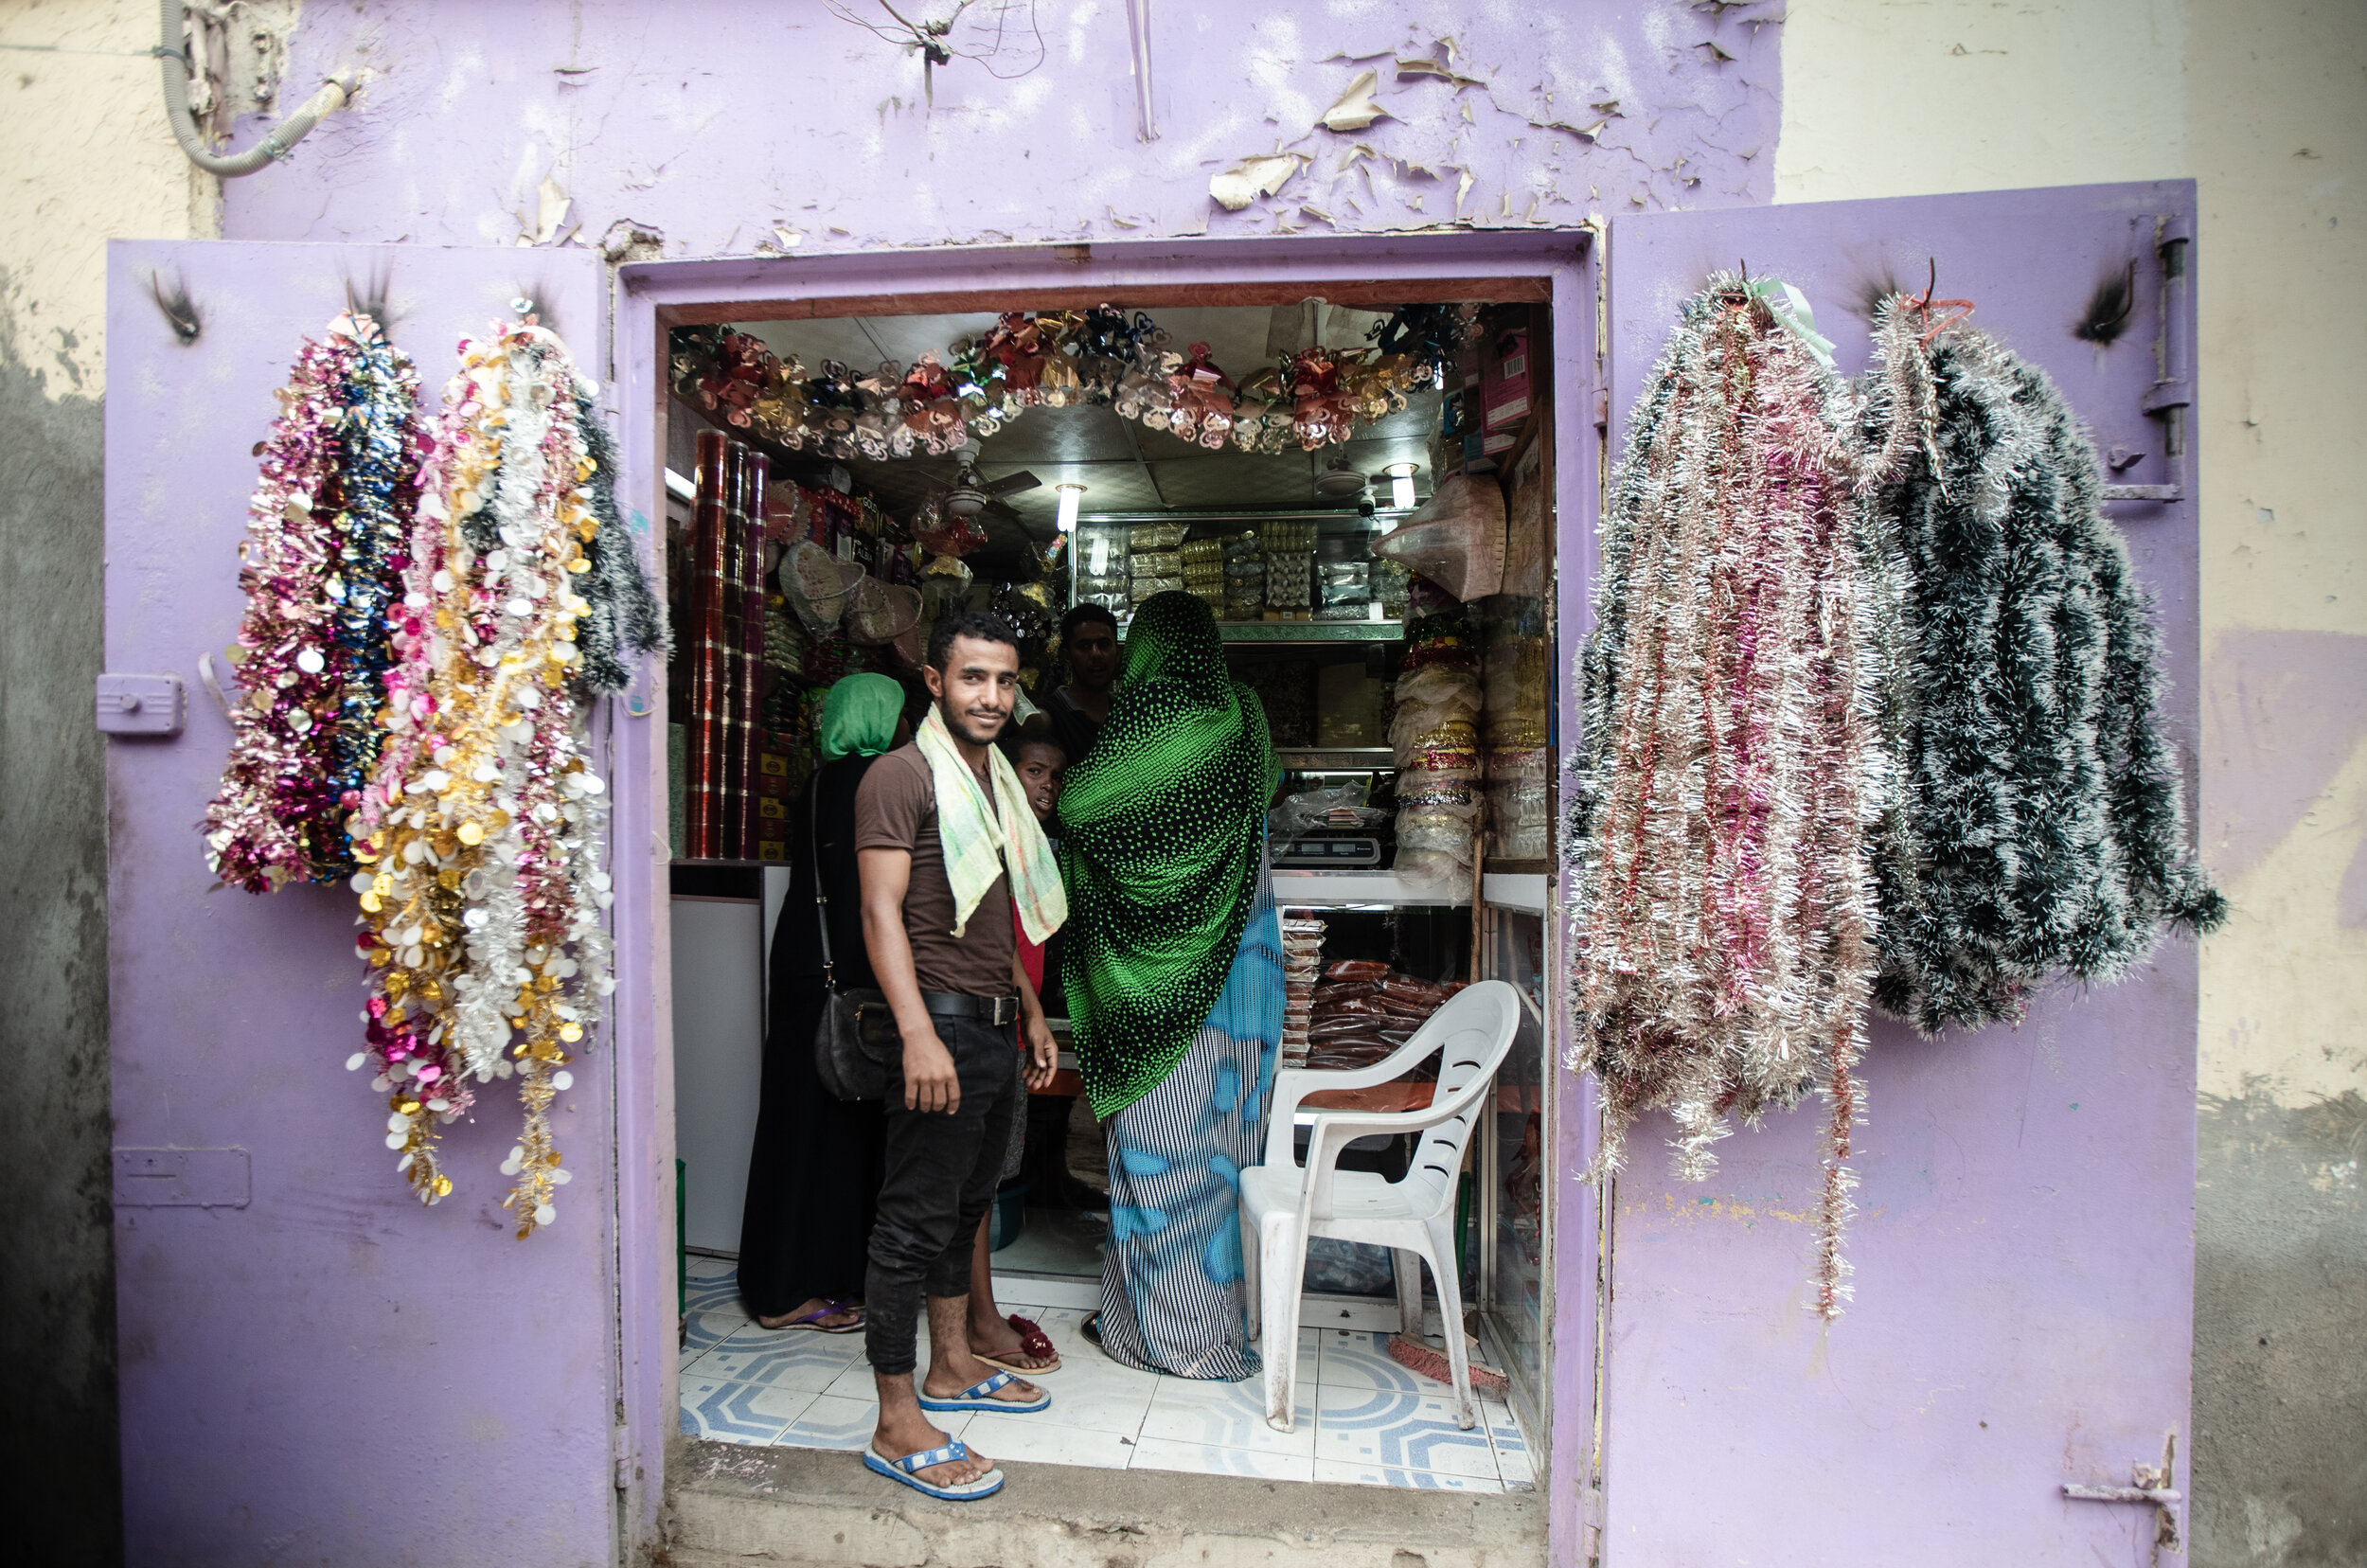  a Yemeni shop in Rue des Mouches in Djibouti city, the capital of Djibouti. 2019 